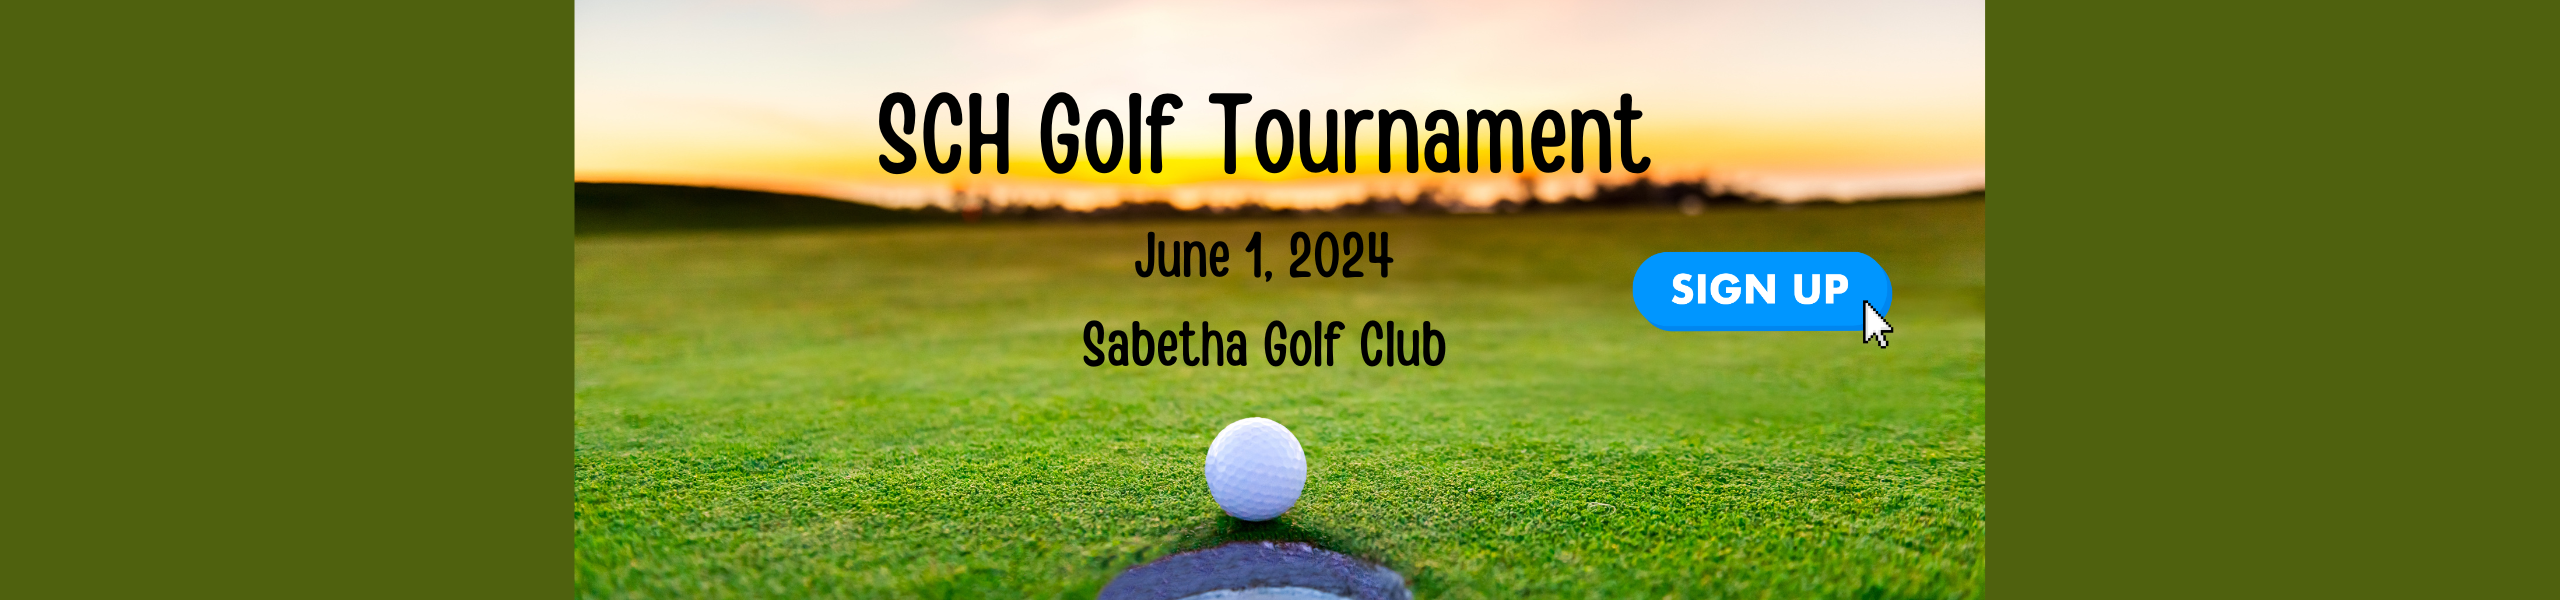 SCH Golf Tournament 
June 2, 2024
Sabetha Golf Club

Click on ad to sign up